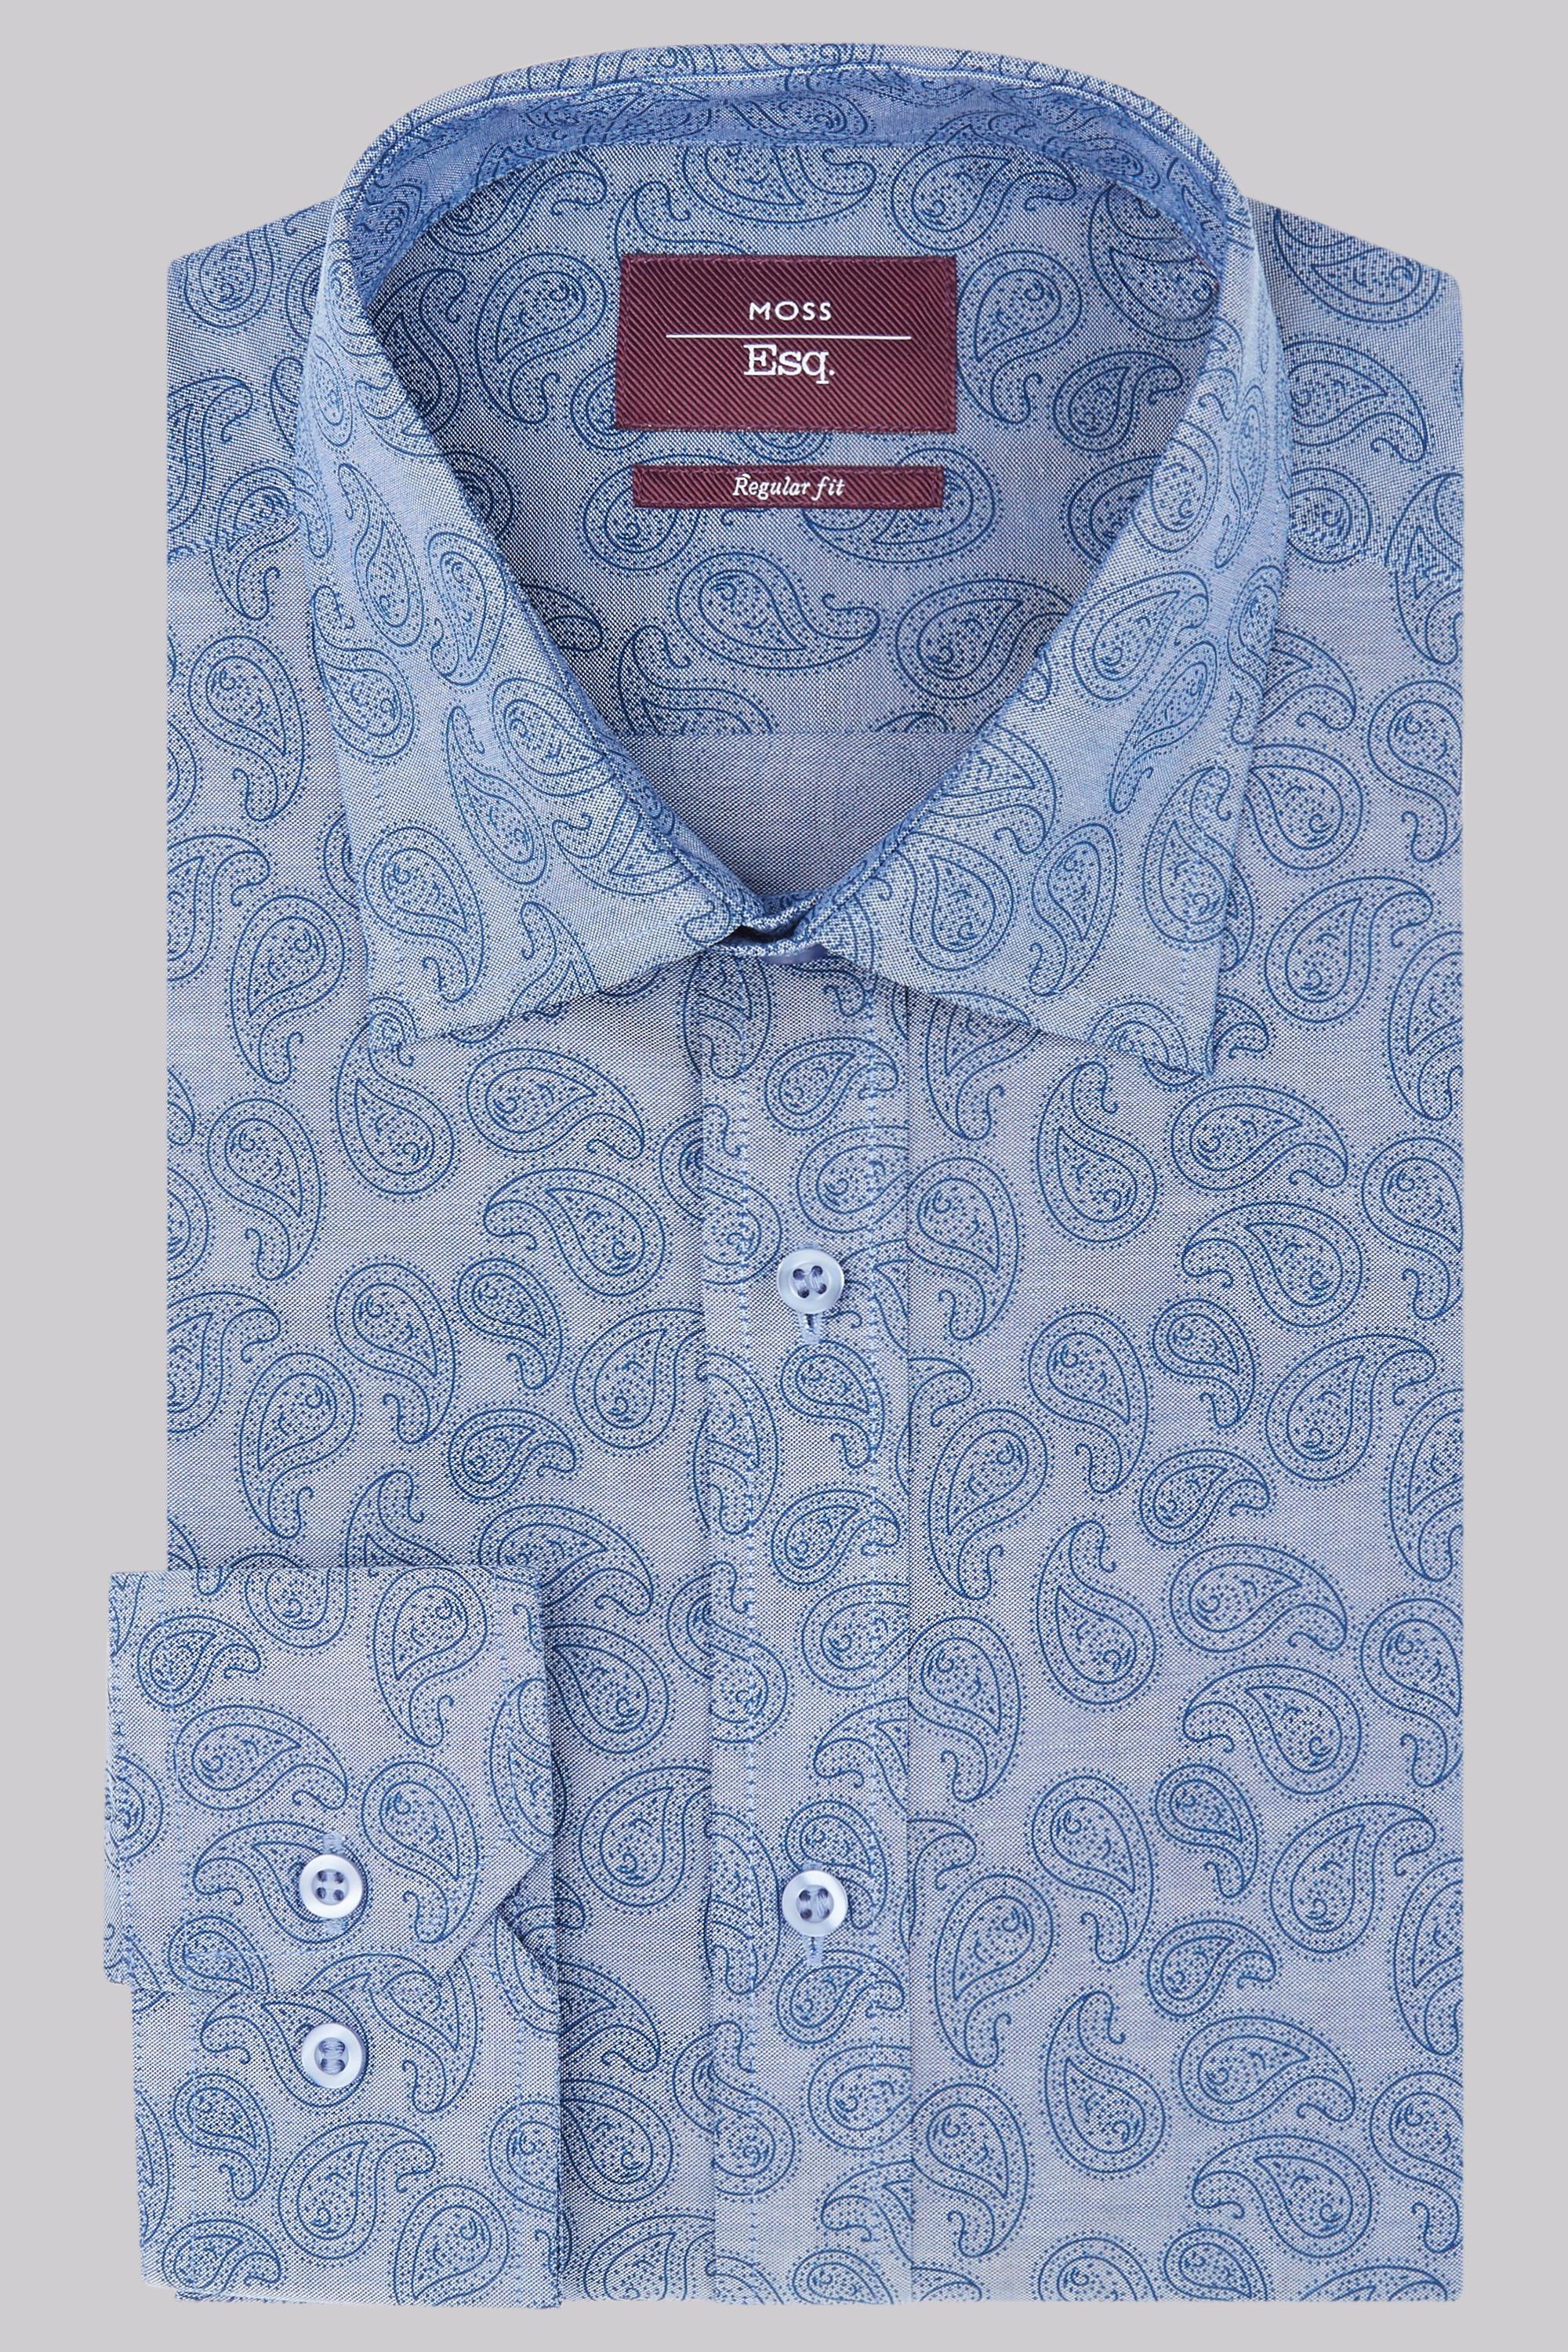 Moss Esq. Cotton Regular Fit Blue Single Cuff Chambray Paisley Print ...